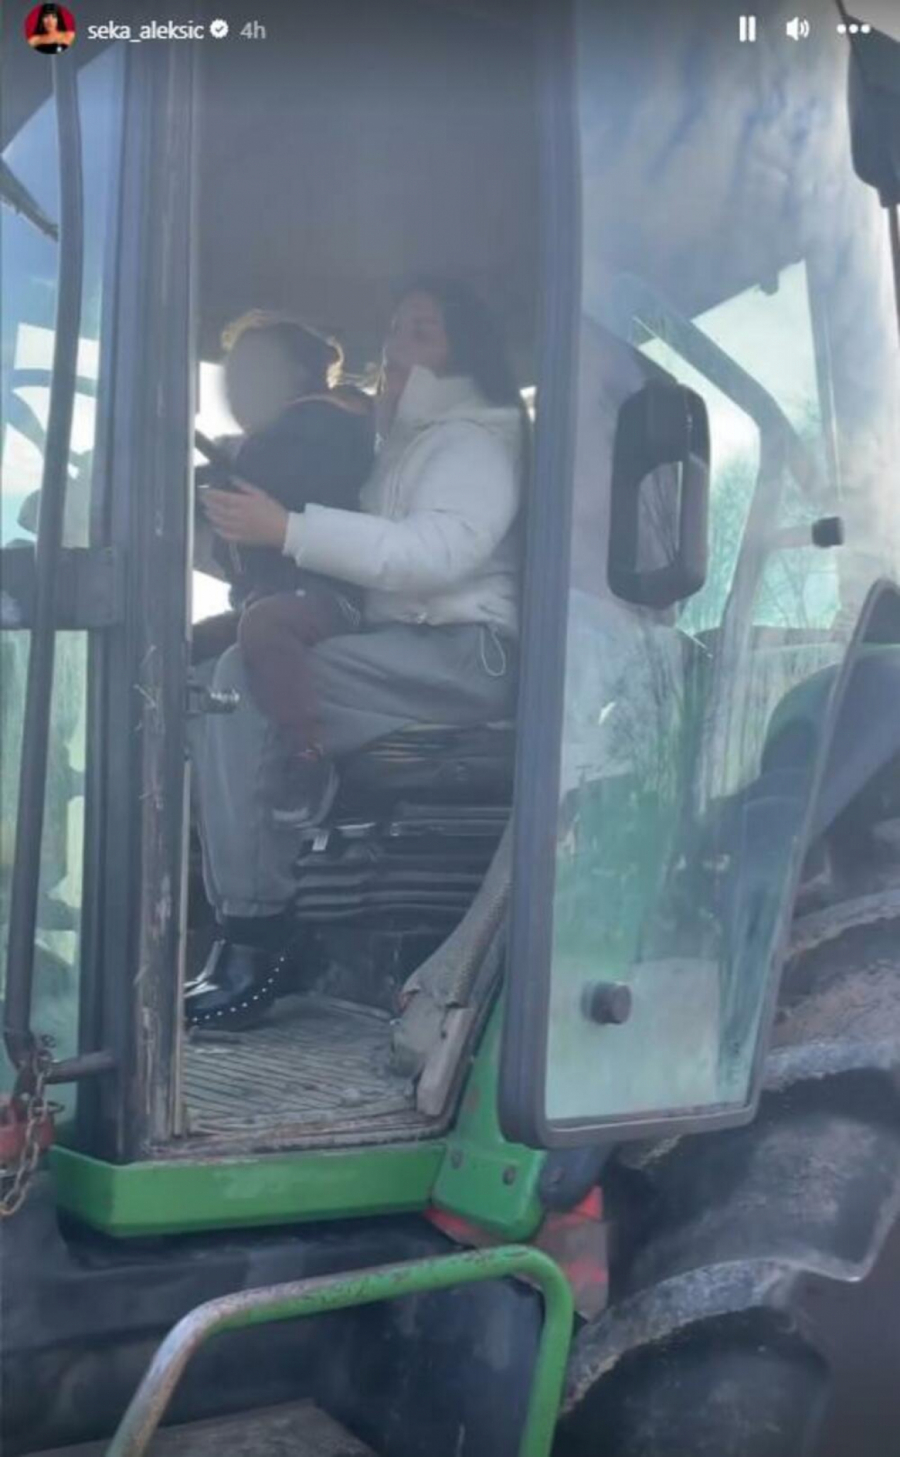 HIT SNIMAK Seka Aleksić vozi traktor i uživa sa svojim sinom NASMEJAĆE VAS DO SUZA (VIDEO)